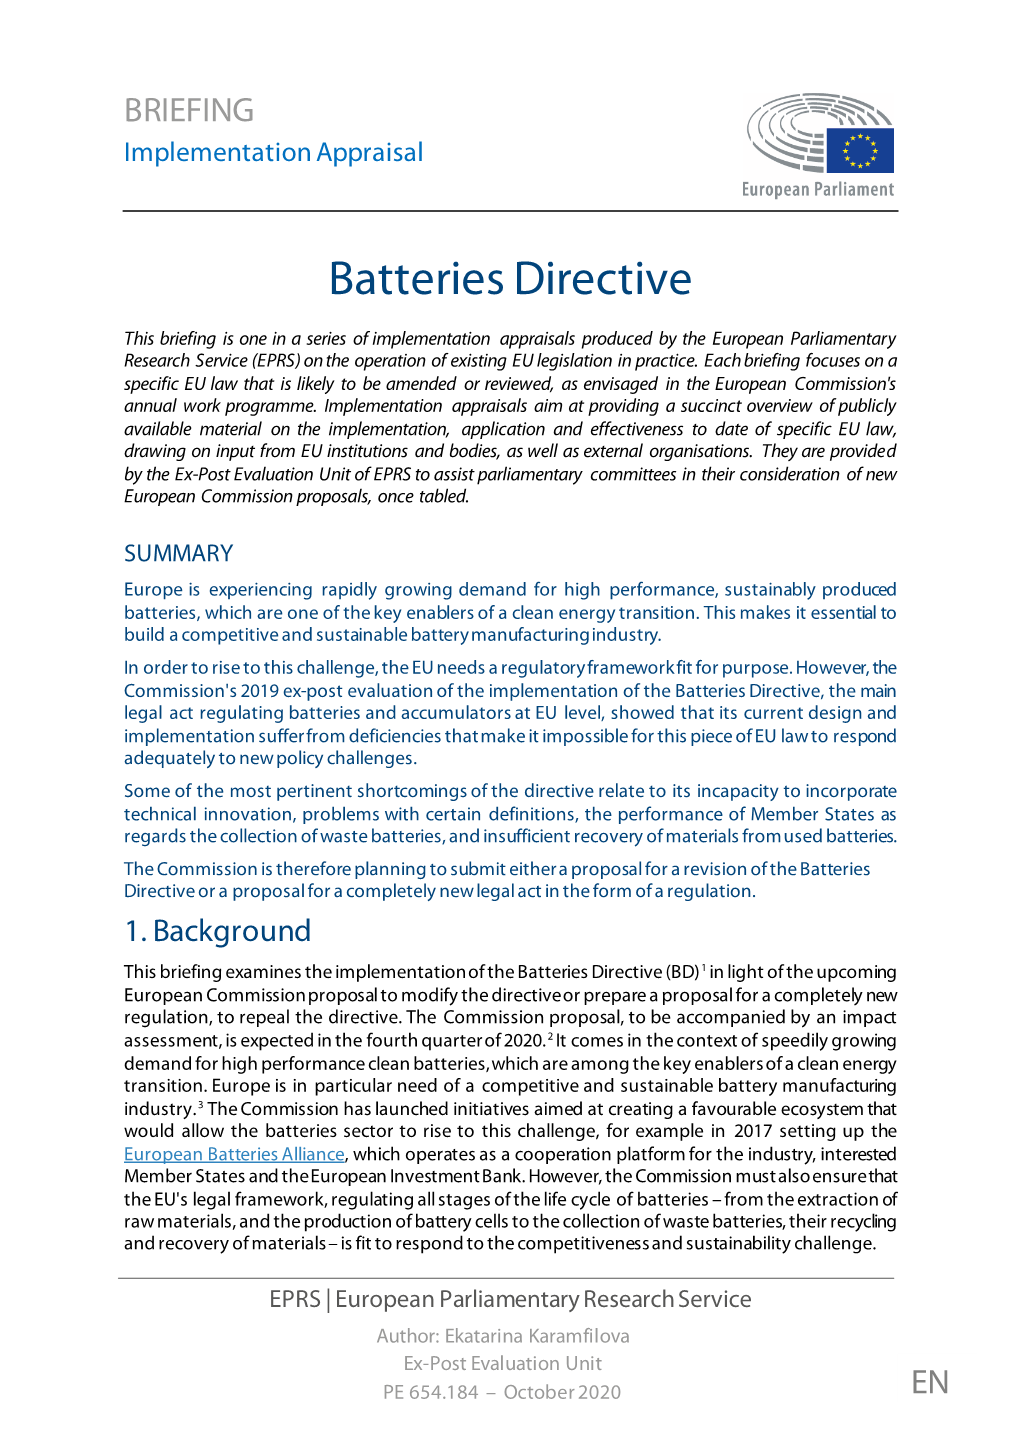 Batteries Directive (2020)